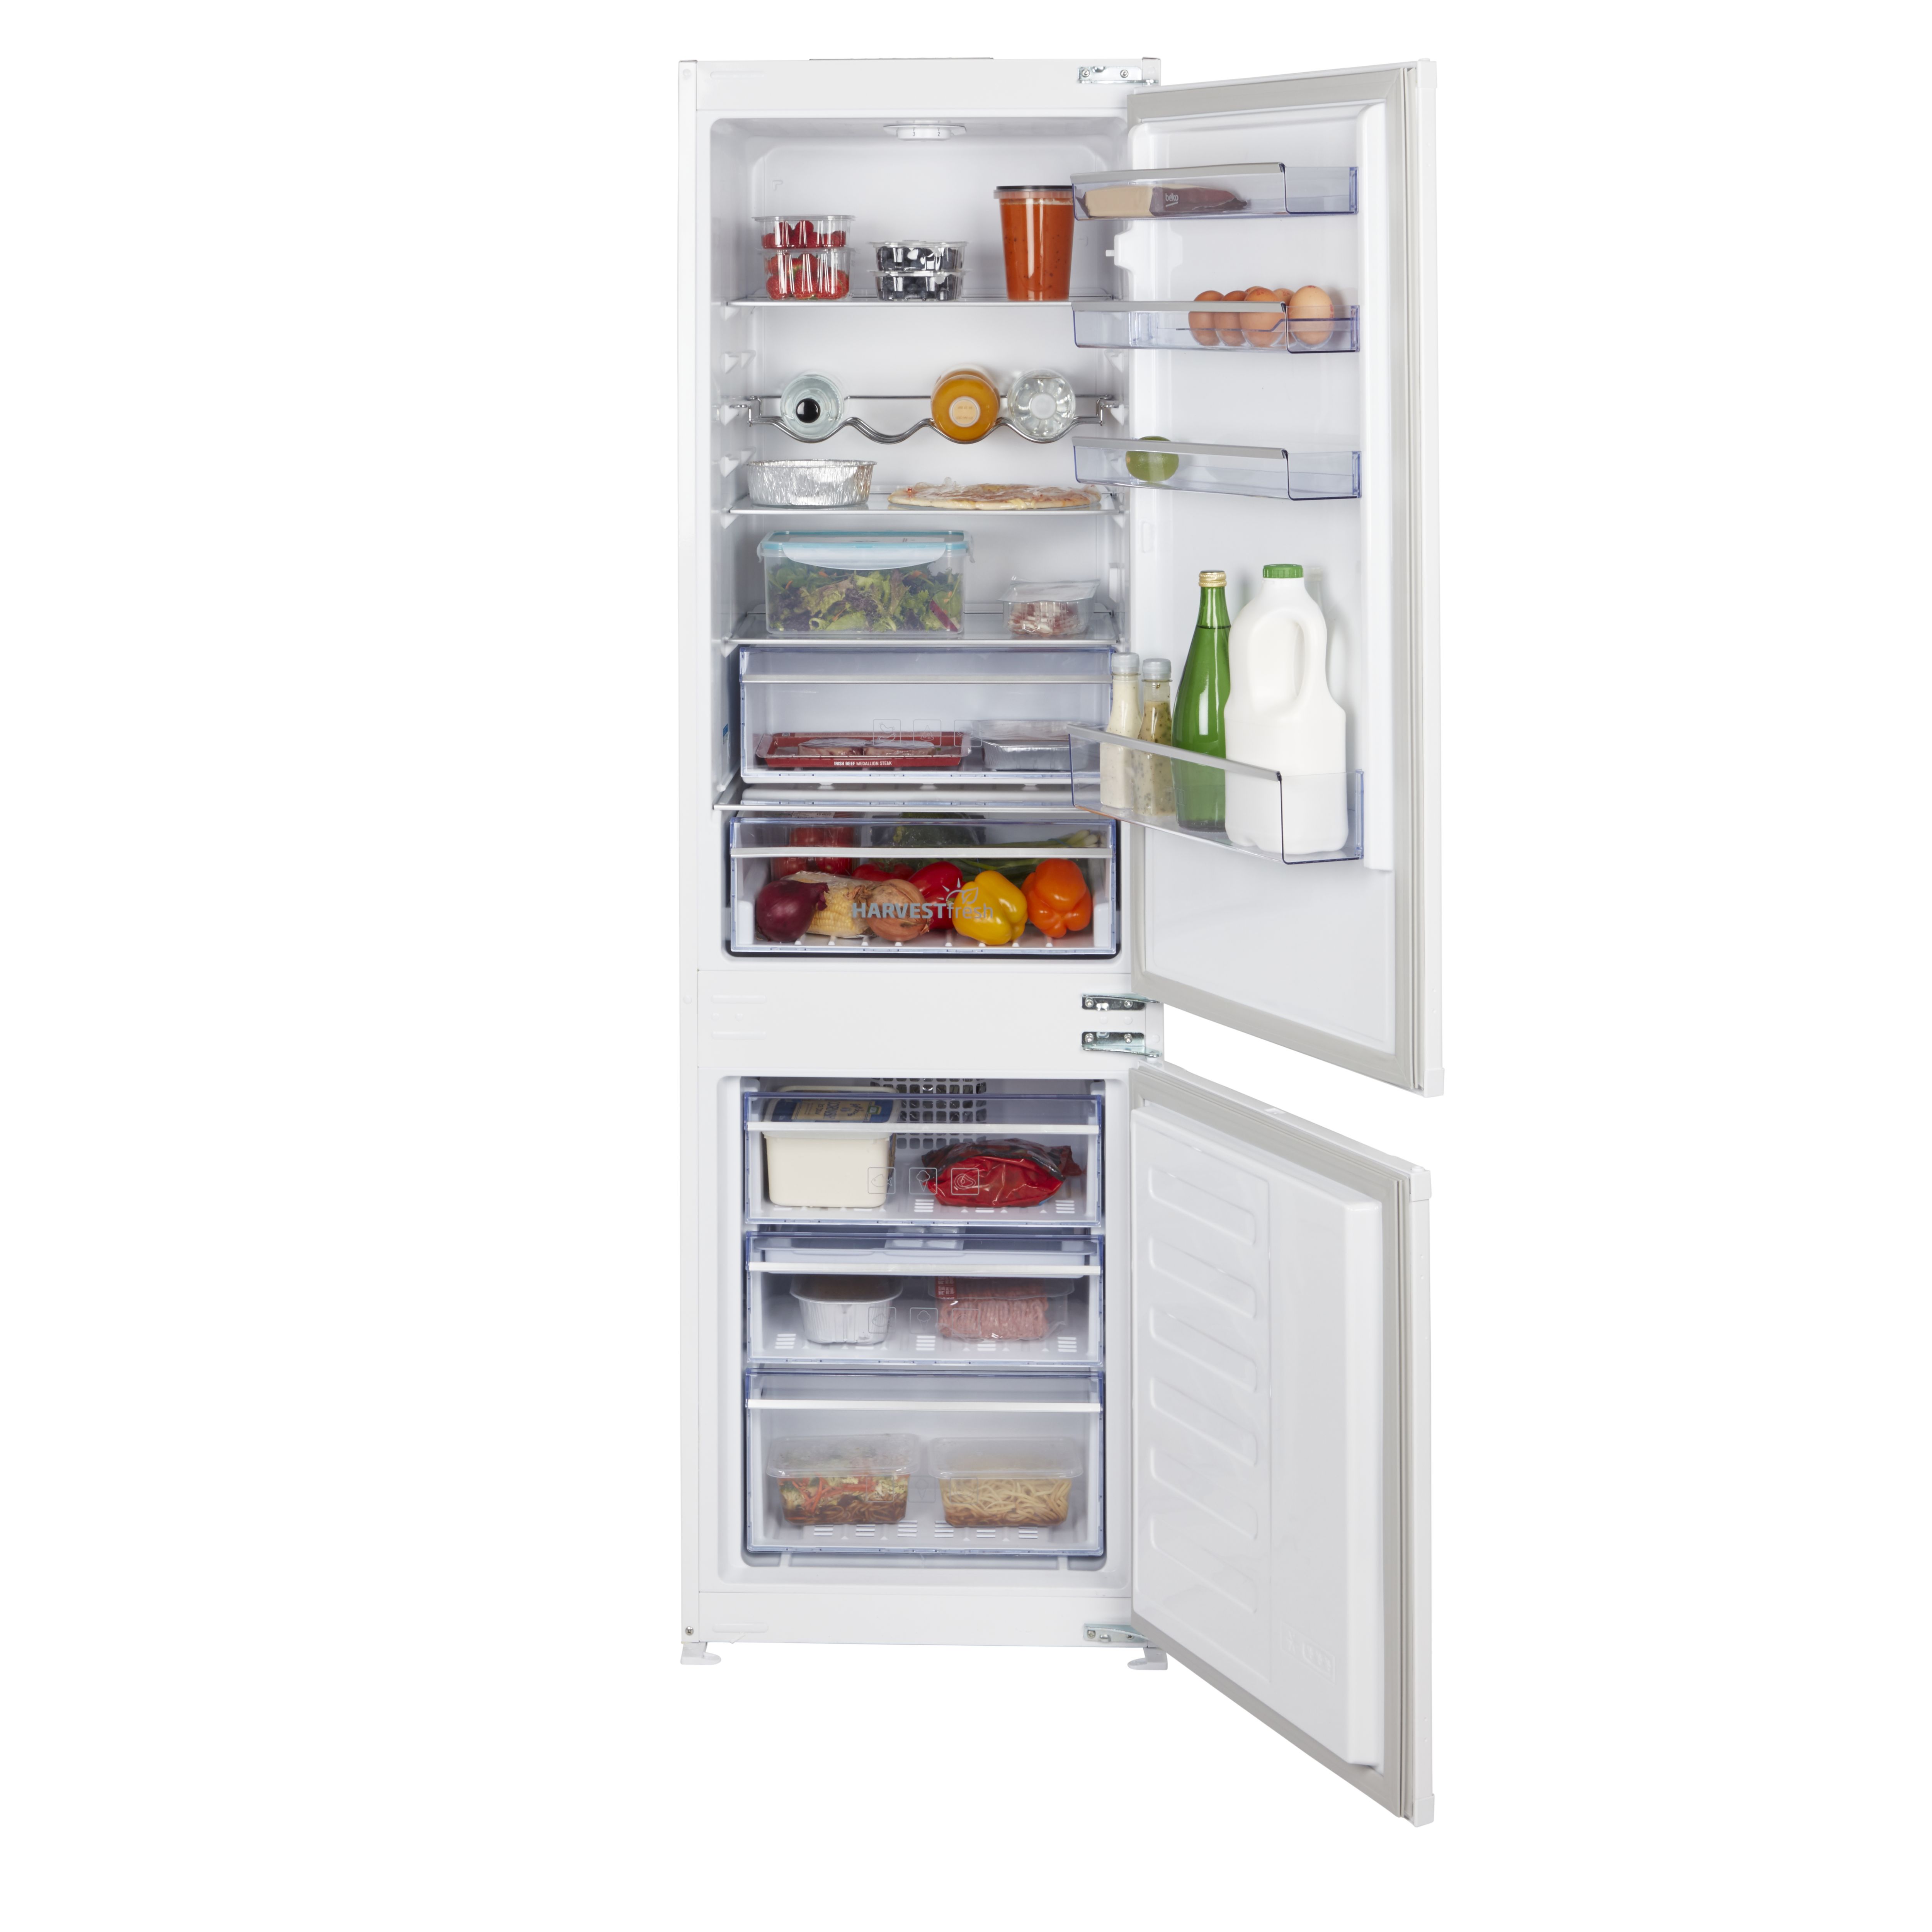 39++ Costco aberdeen fridge freezers info